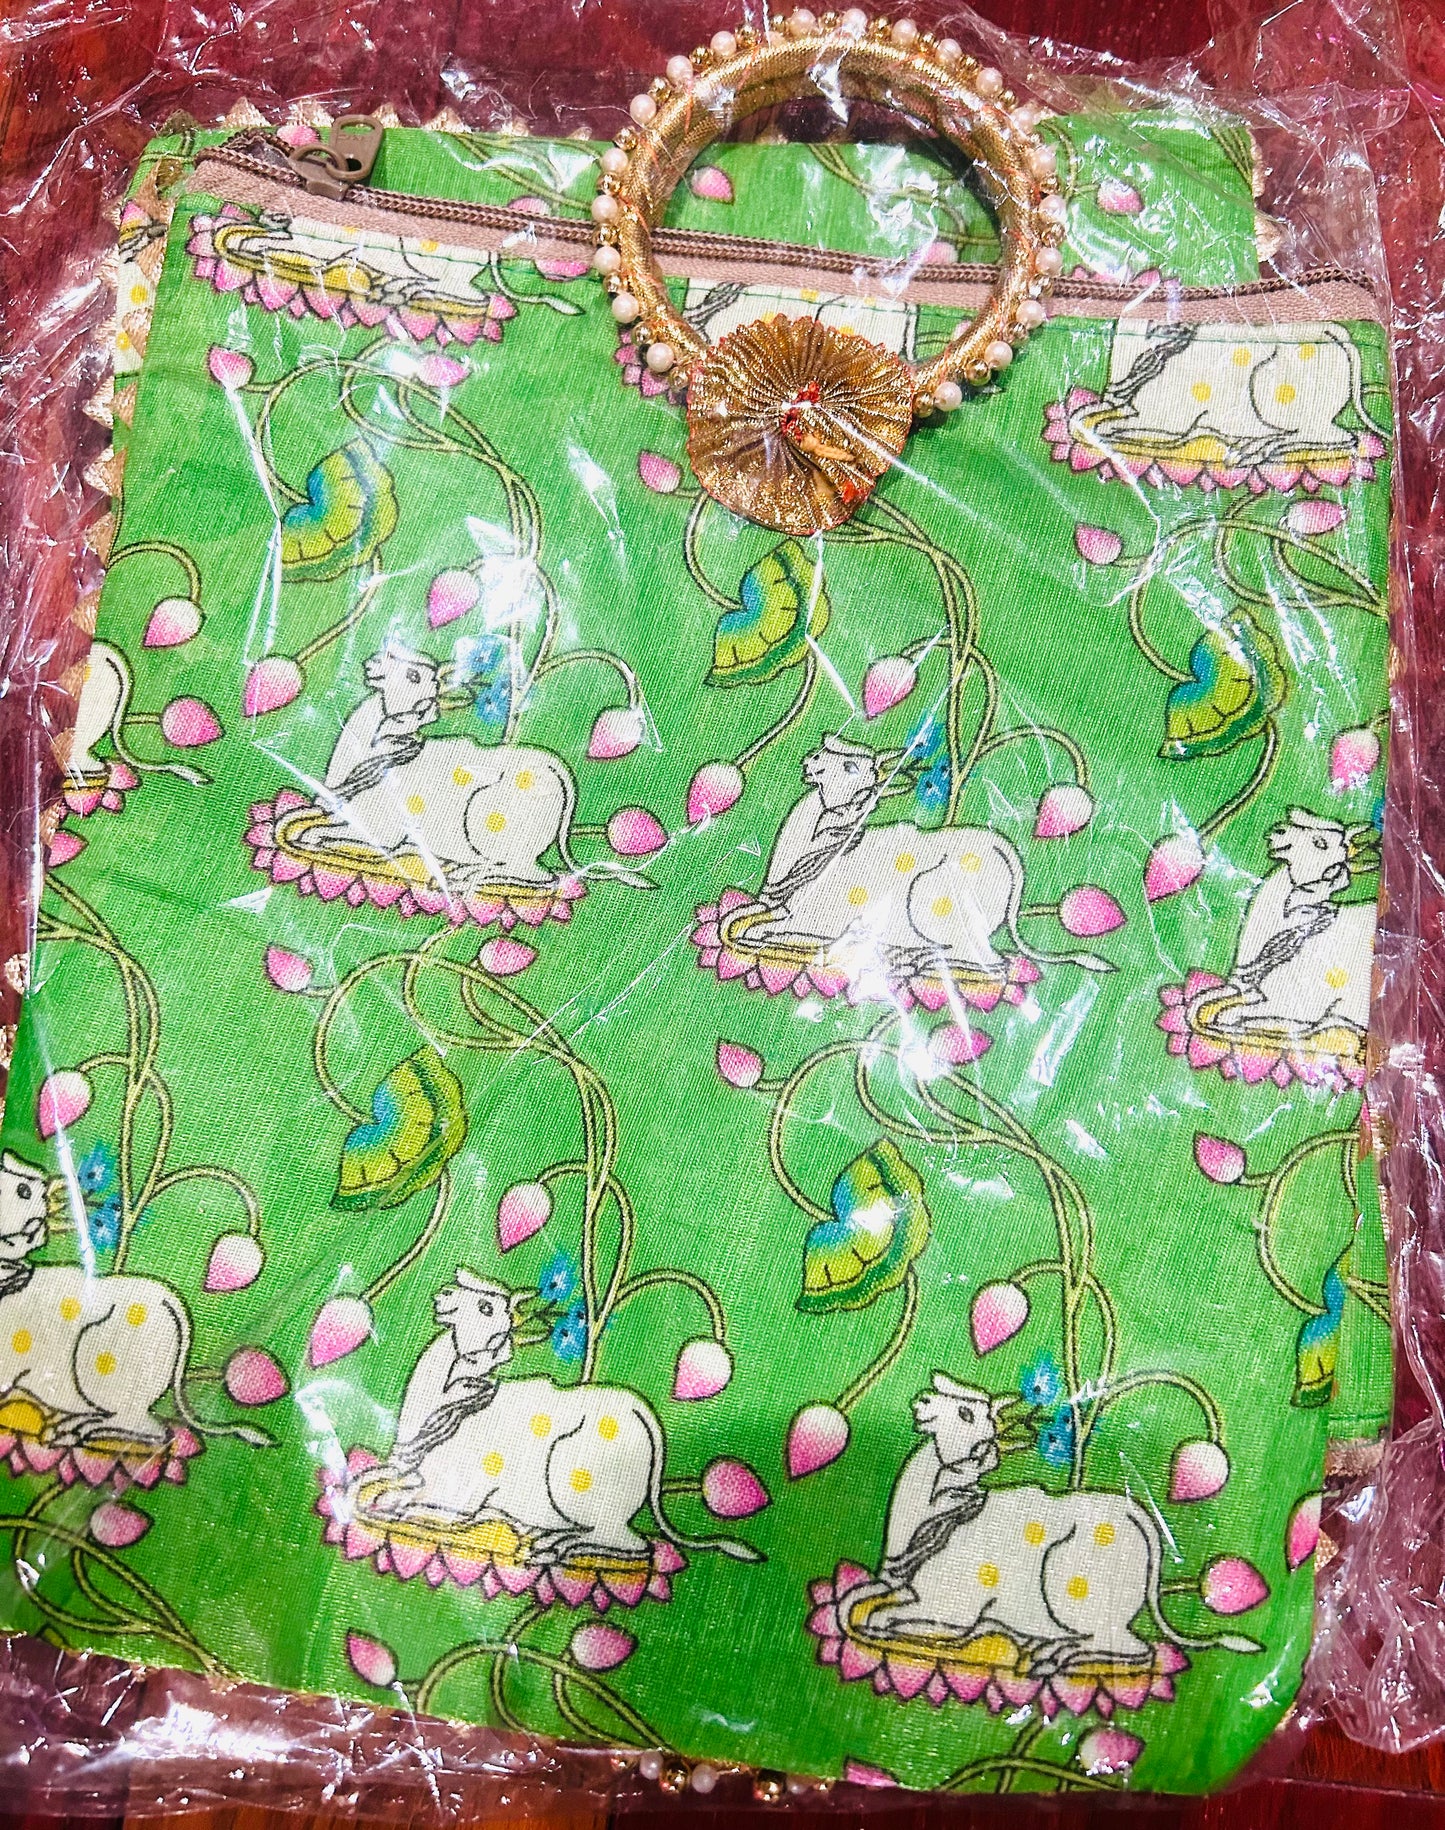 Pichwai print Potli bags for return gifts